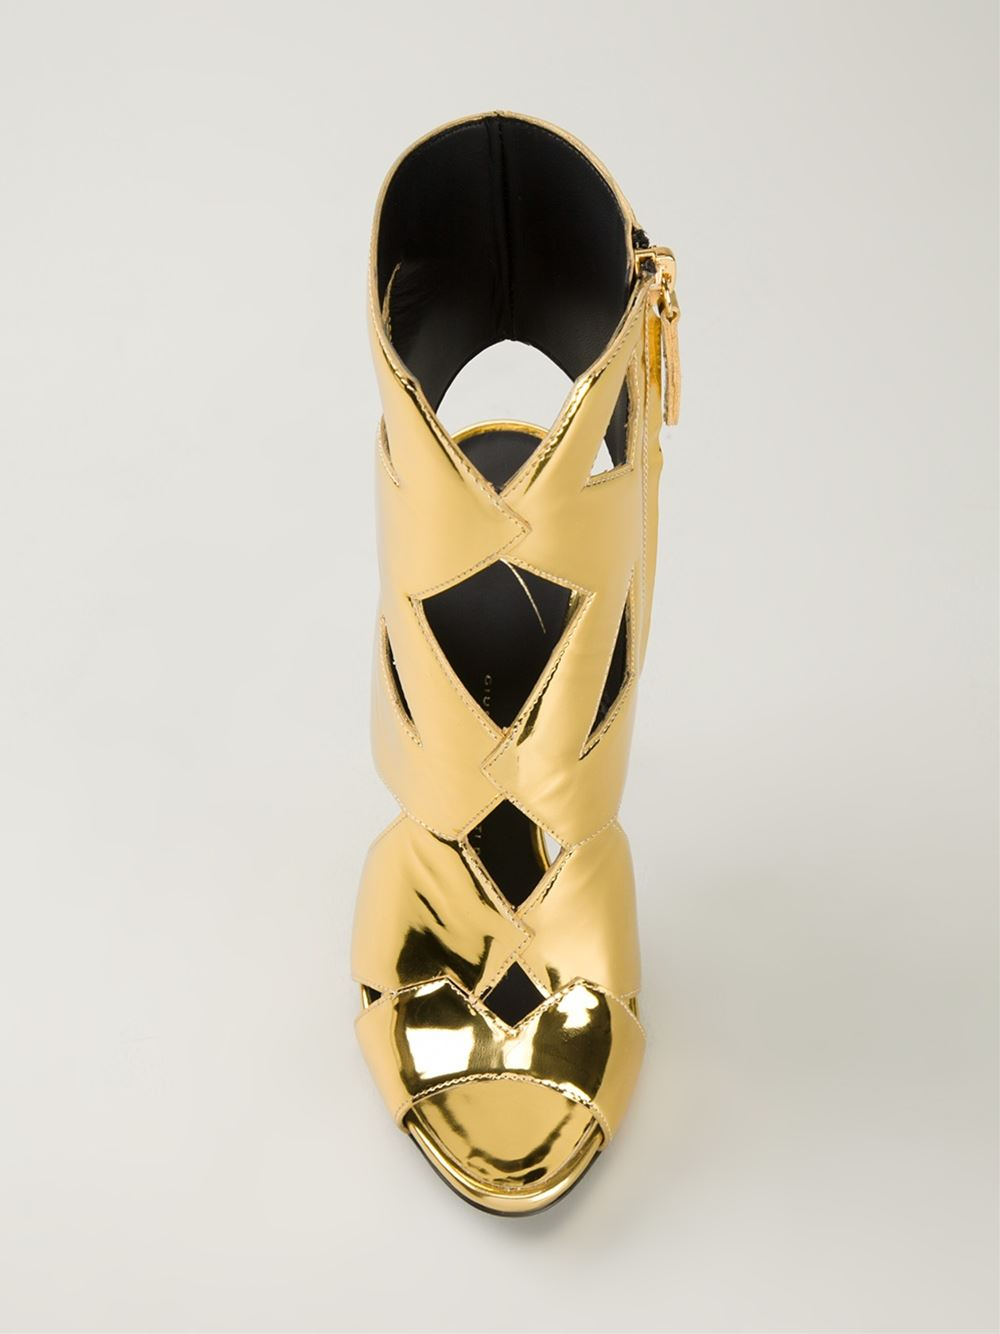 Lyst - Giuseppe Zanotti Metallic Sandals in Metallic